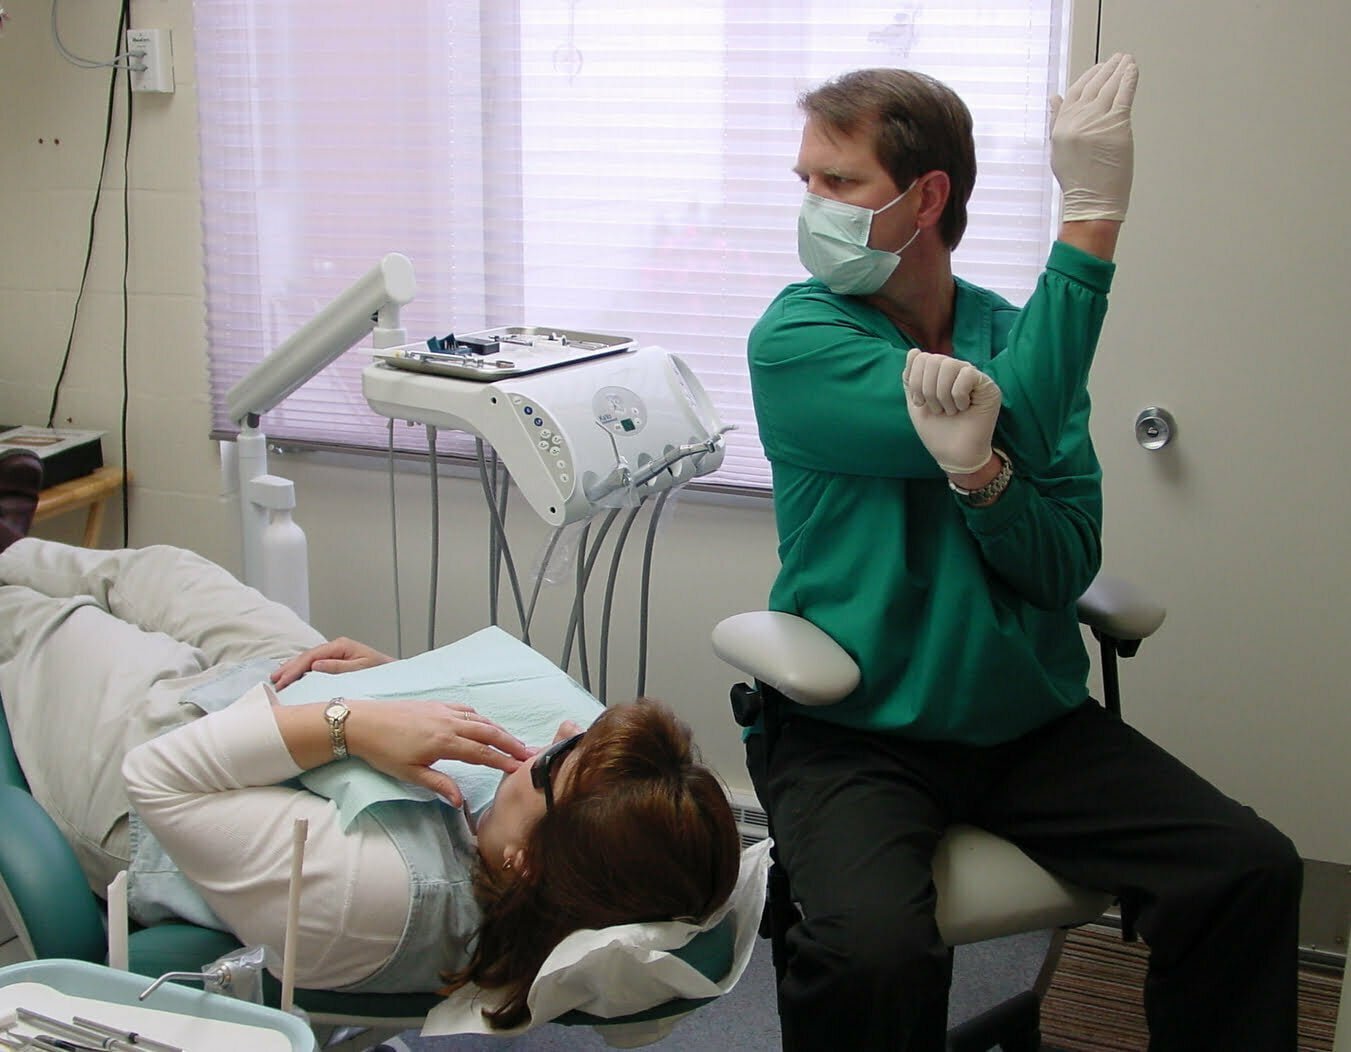 pain free dentist visit